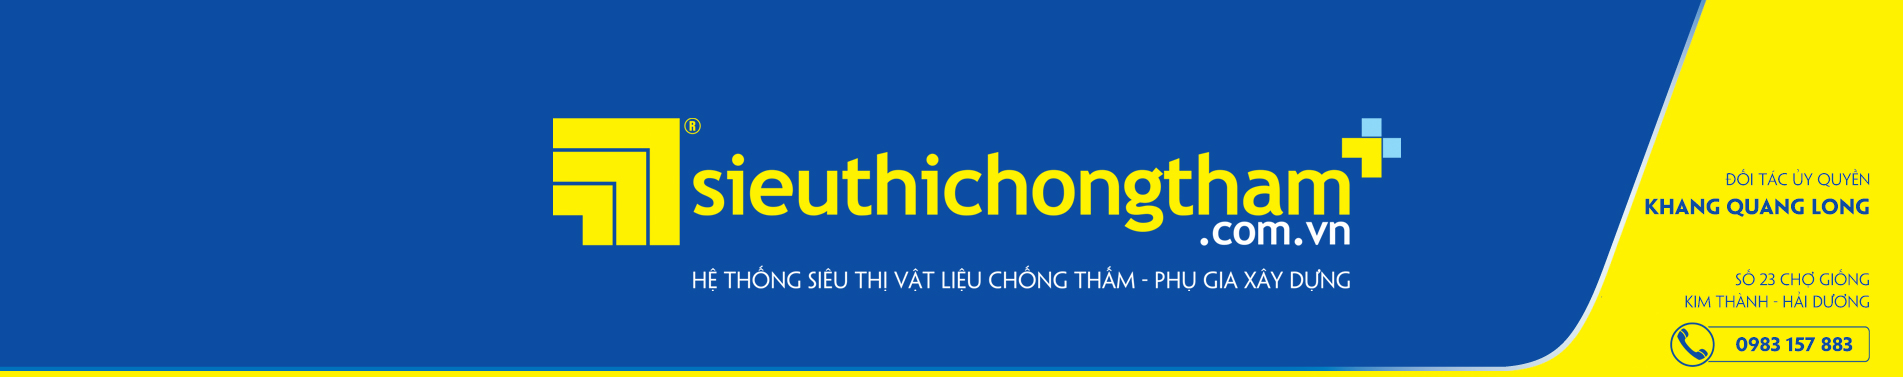 Khang Quang Long Banner